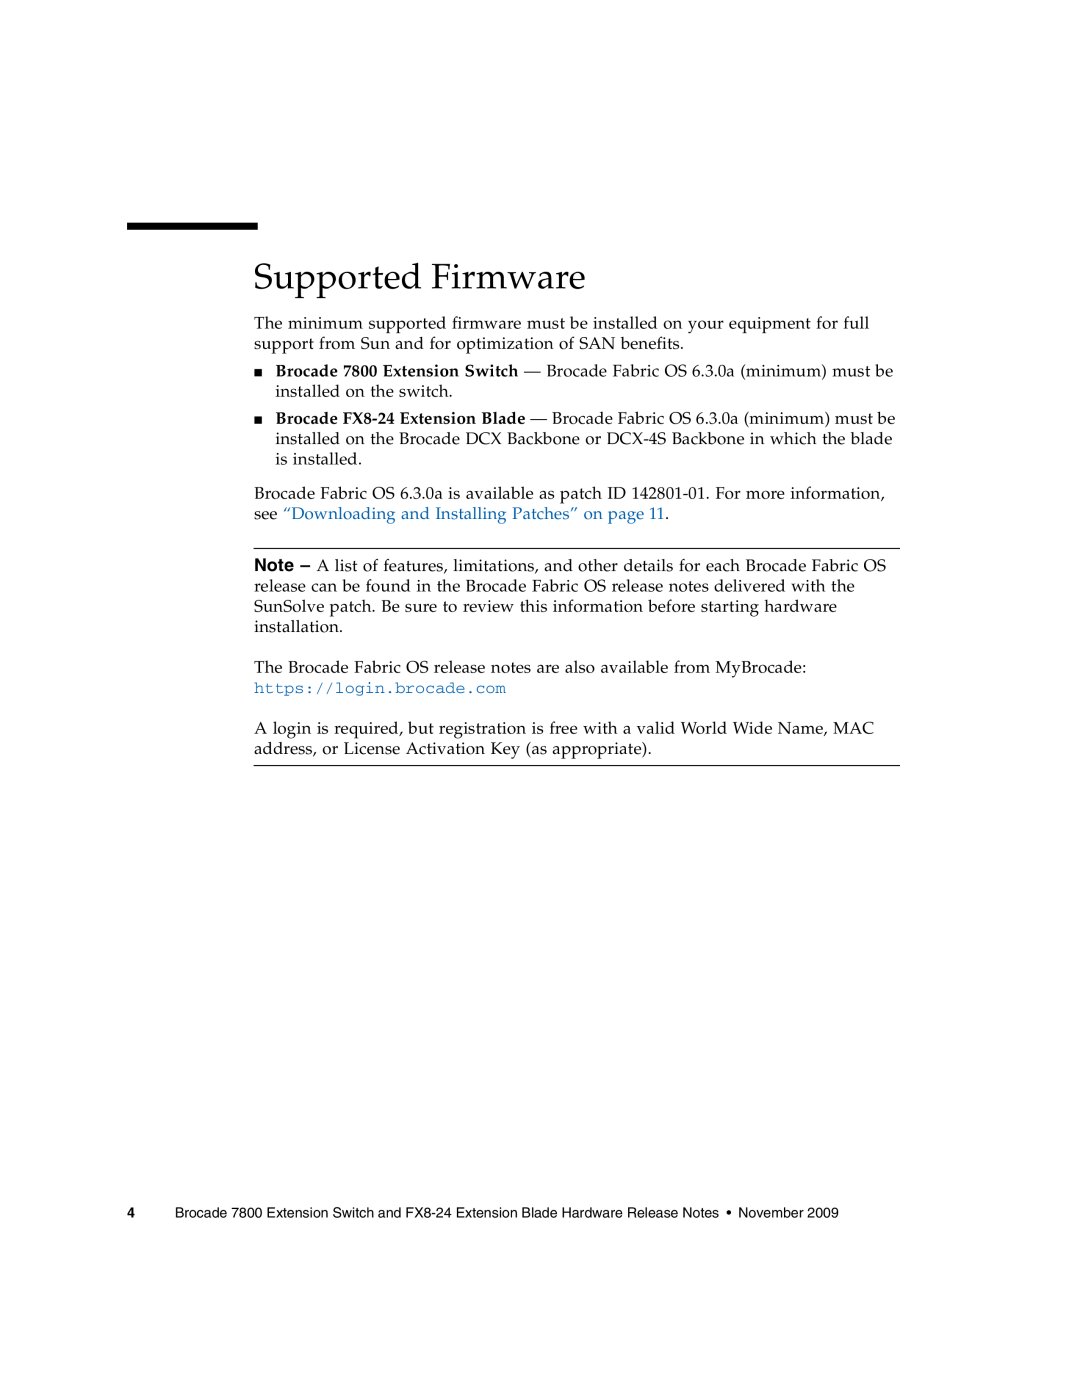 Sun Microsystems 7800 manual Supported Firmware, https//login.brocade.com 